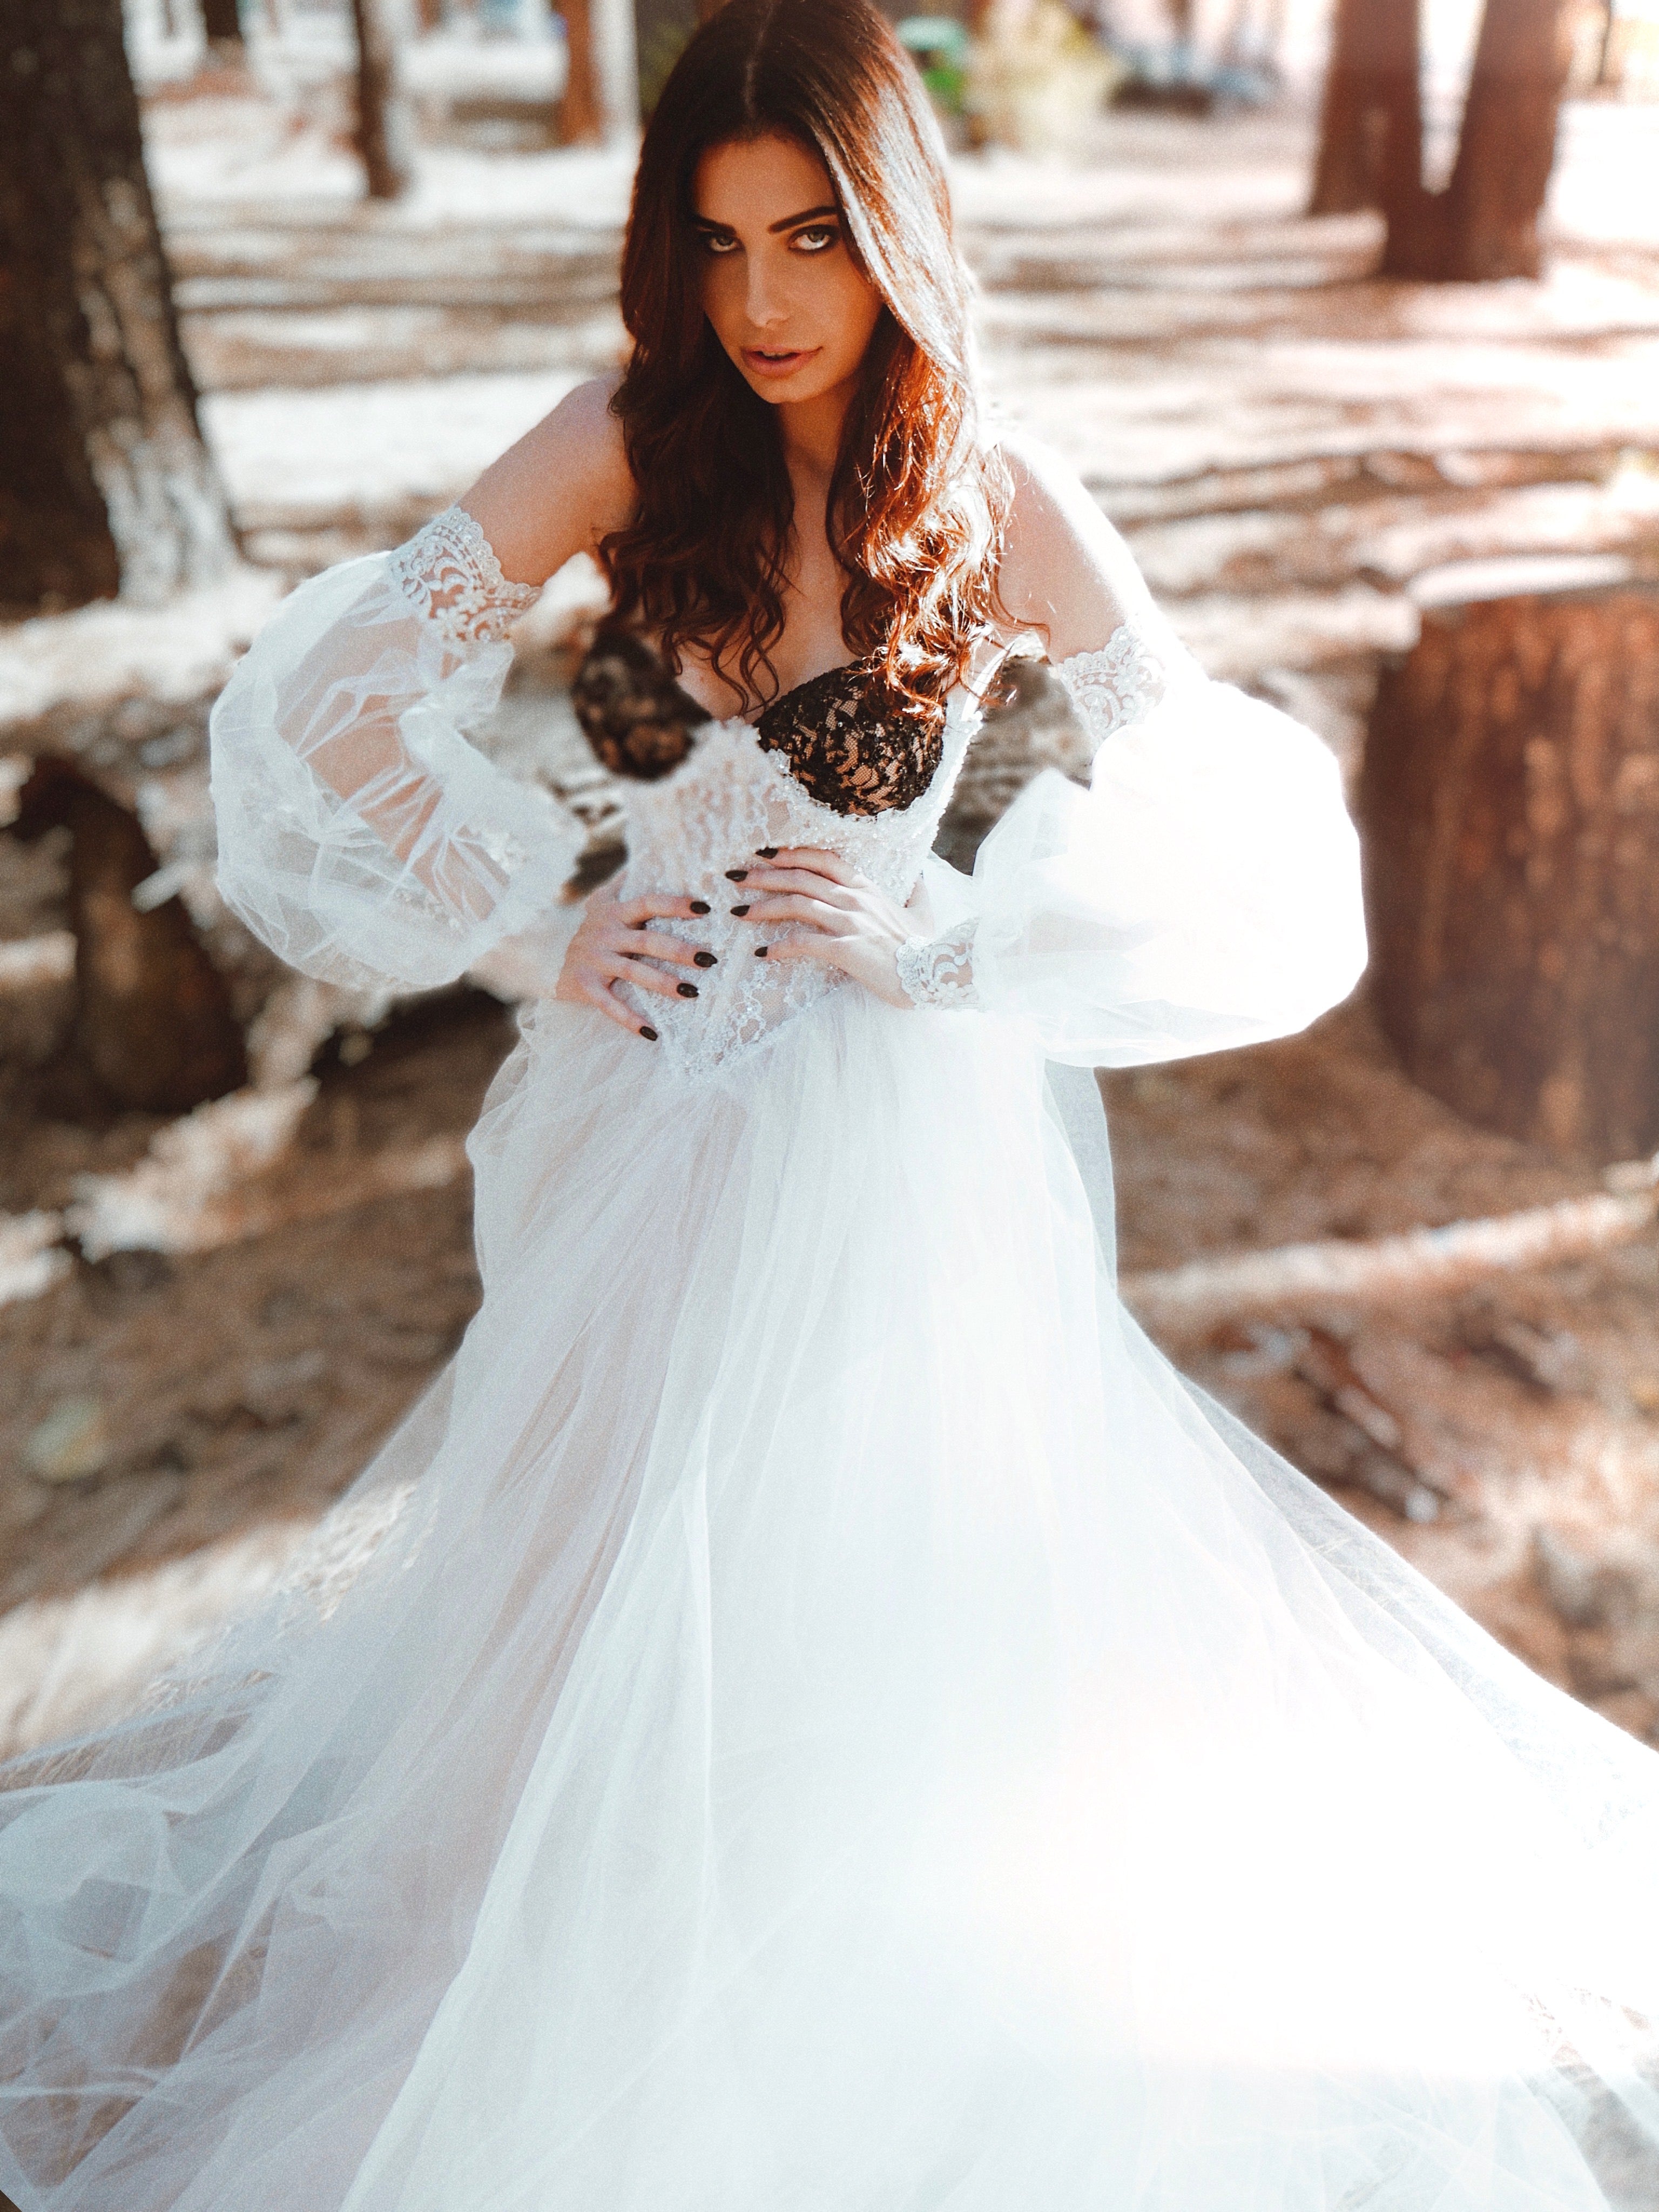 Romantic Drop Waist White Ballgown Wedding Dress - Promfy